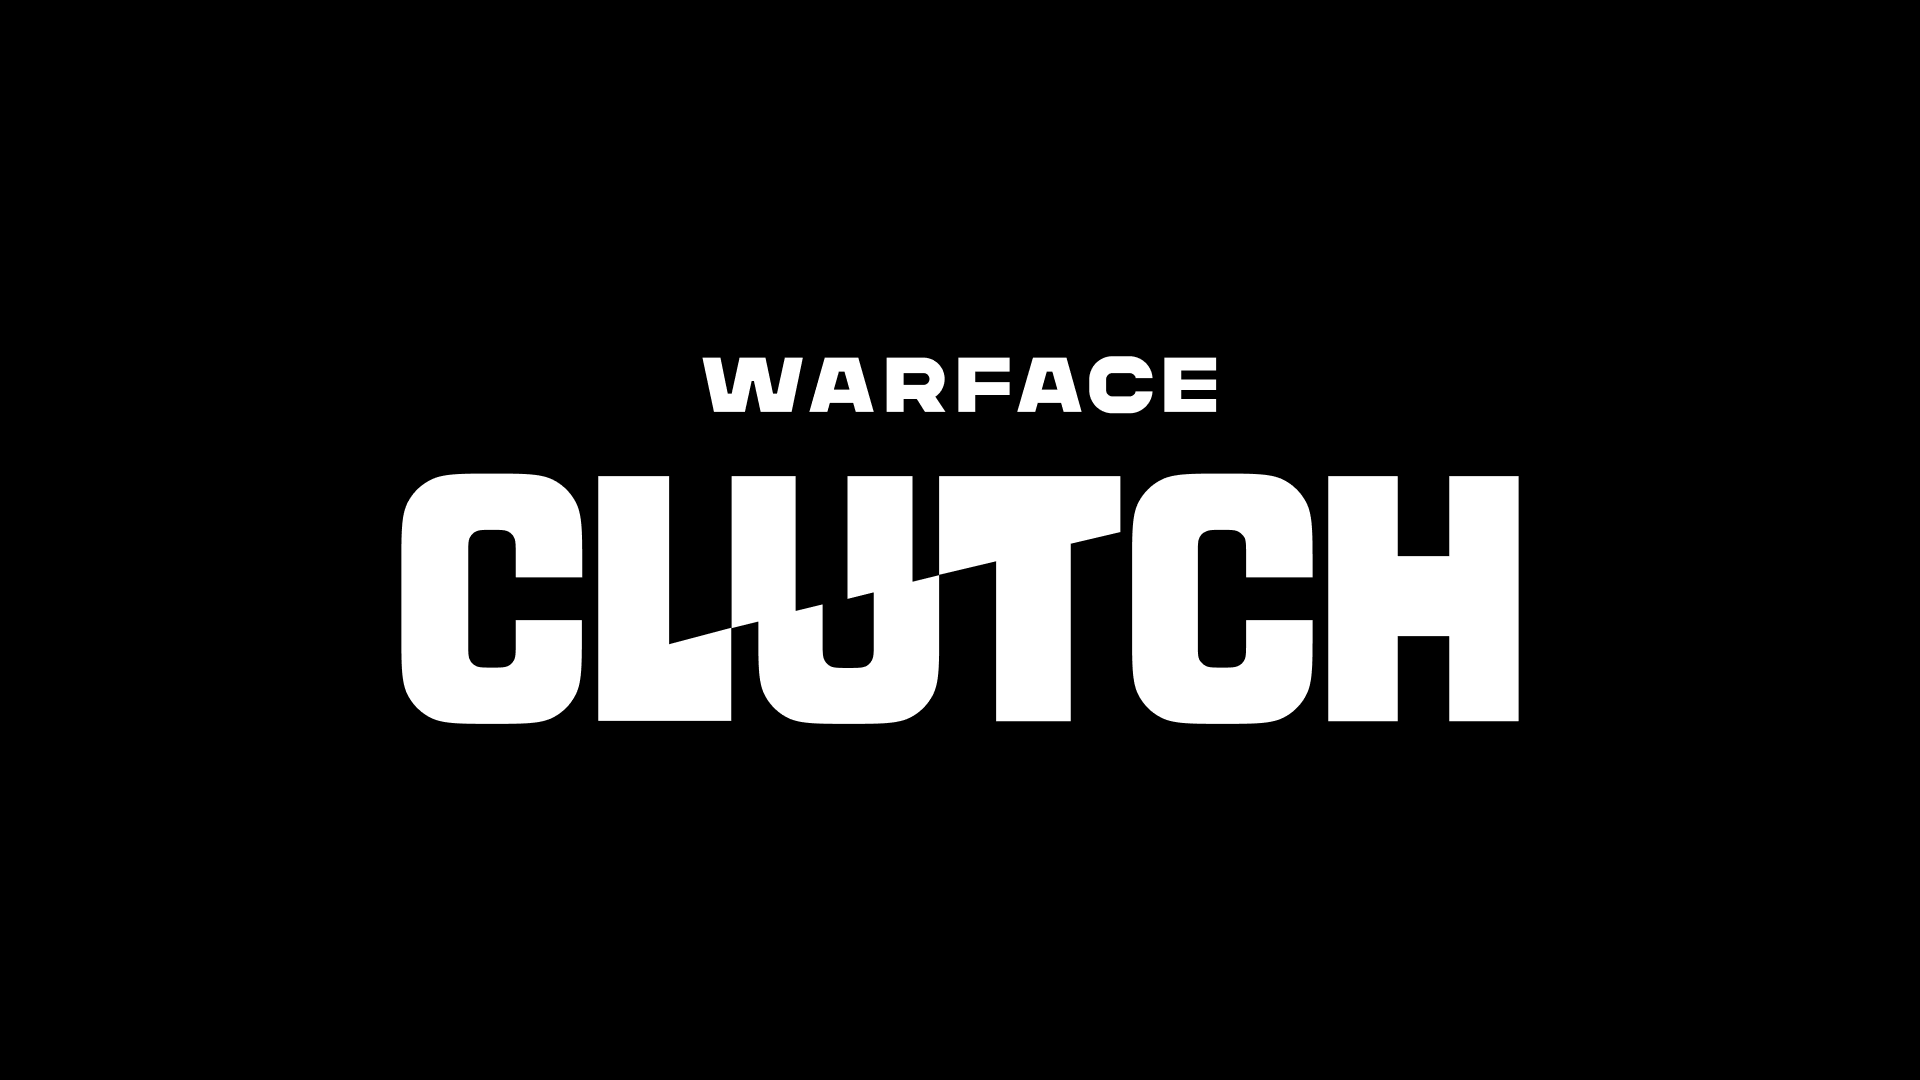 My.games "Warface: Clutch"